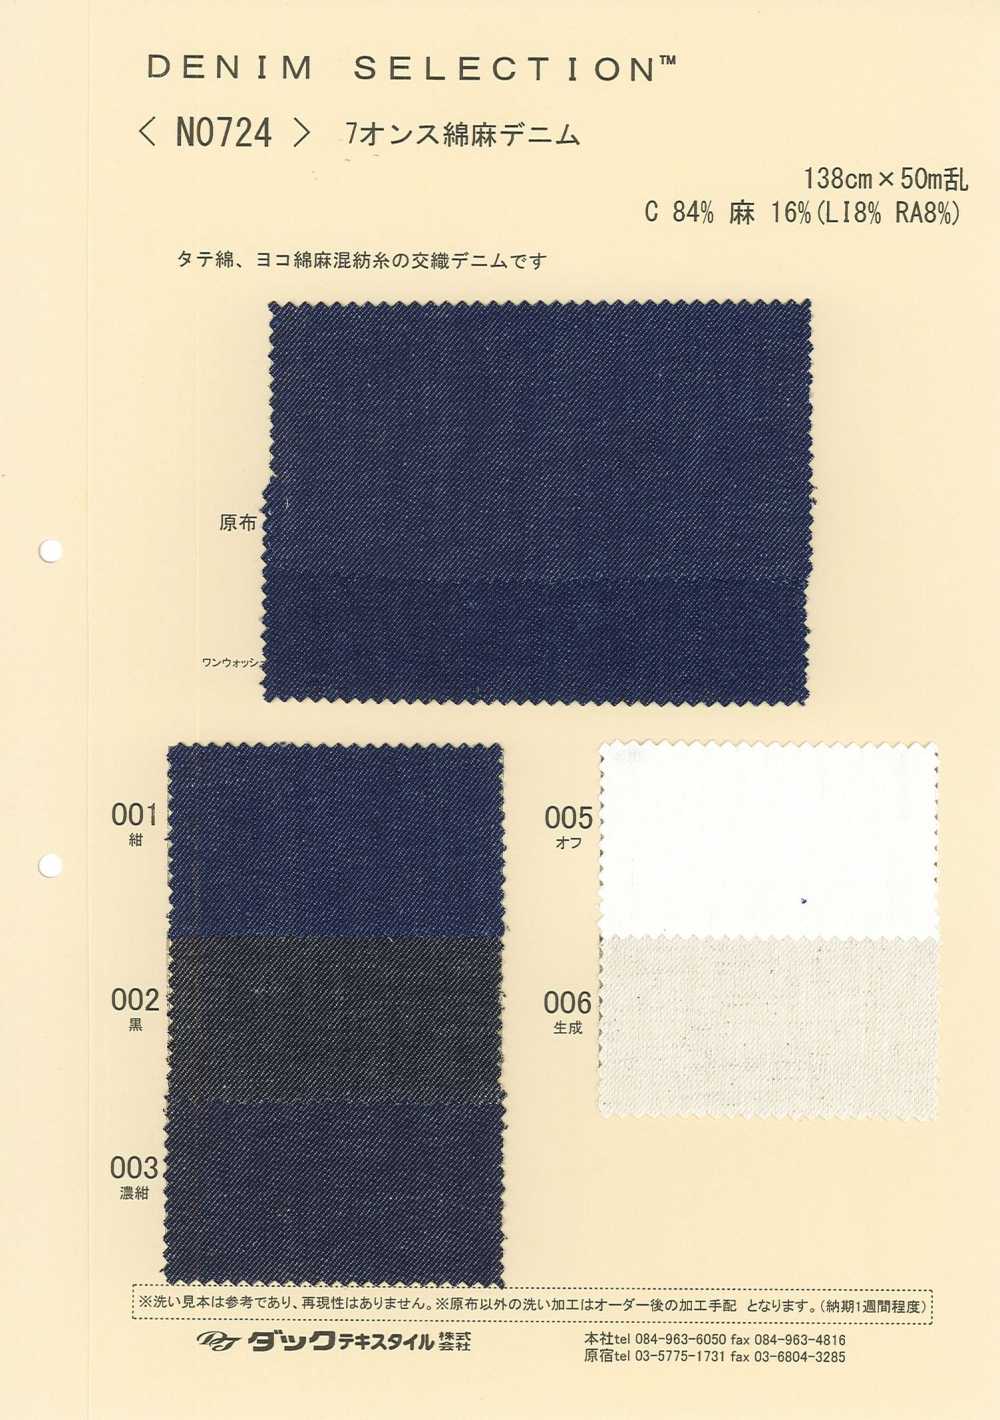 N0724 Denim De Lino[Fabrica Textil] DUCK TEXTILE